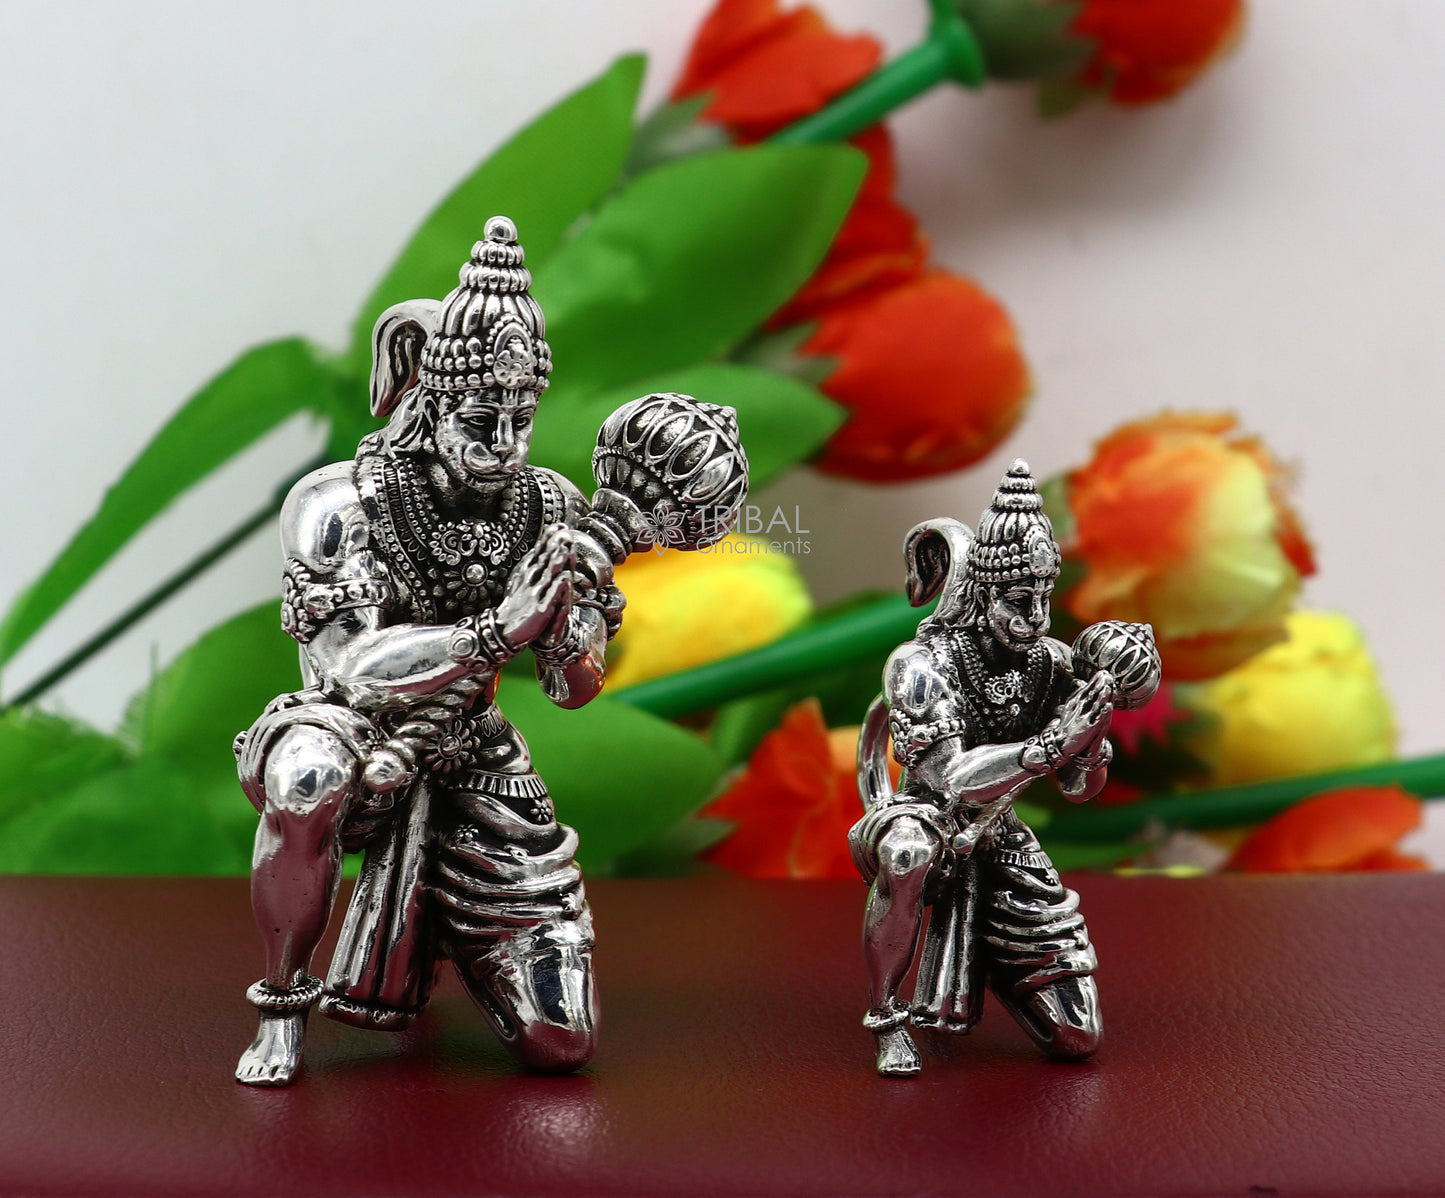 2"/2.5" 925 silver handmade Lord hanuman statue, best puja or gifting god hanuman statue sculpture home temple puja art figurine art618 - TRIBAL ORNAMENTS